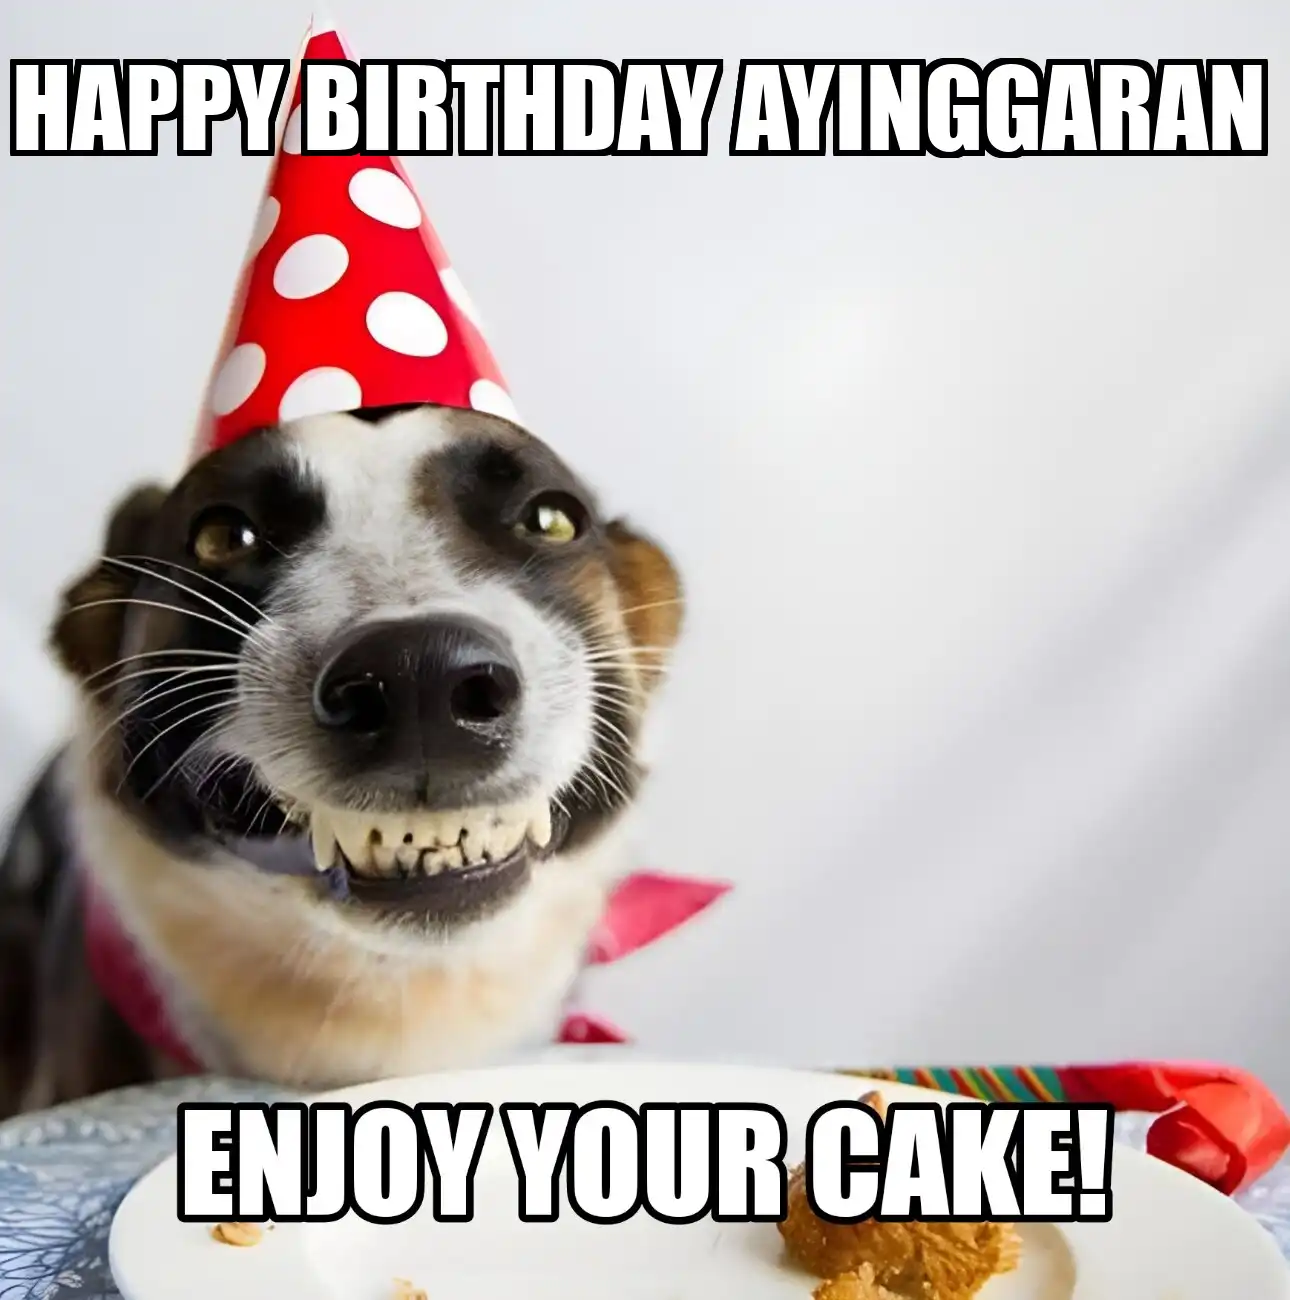 Happy Birthday Ayinggaran Enjoy Your Cake Dog Meme